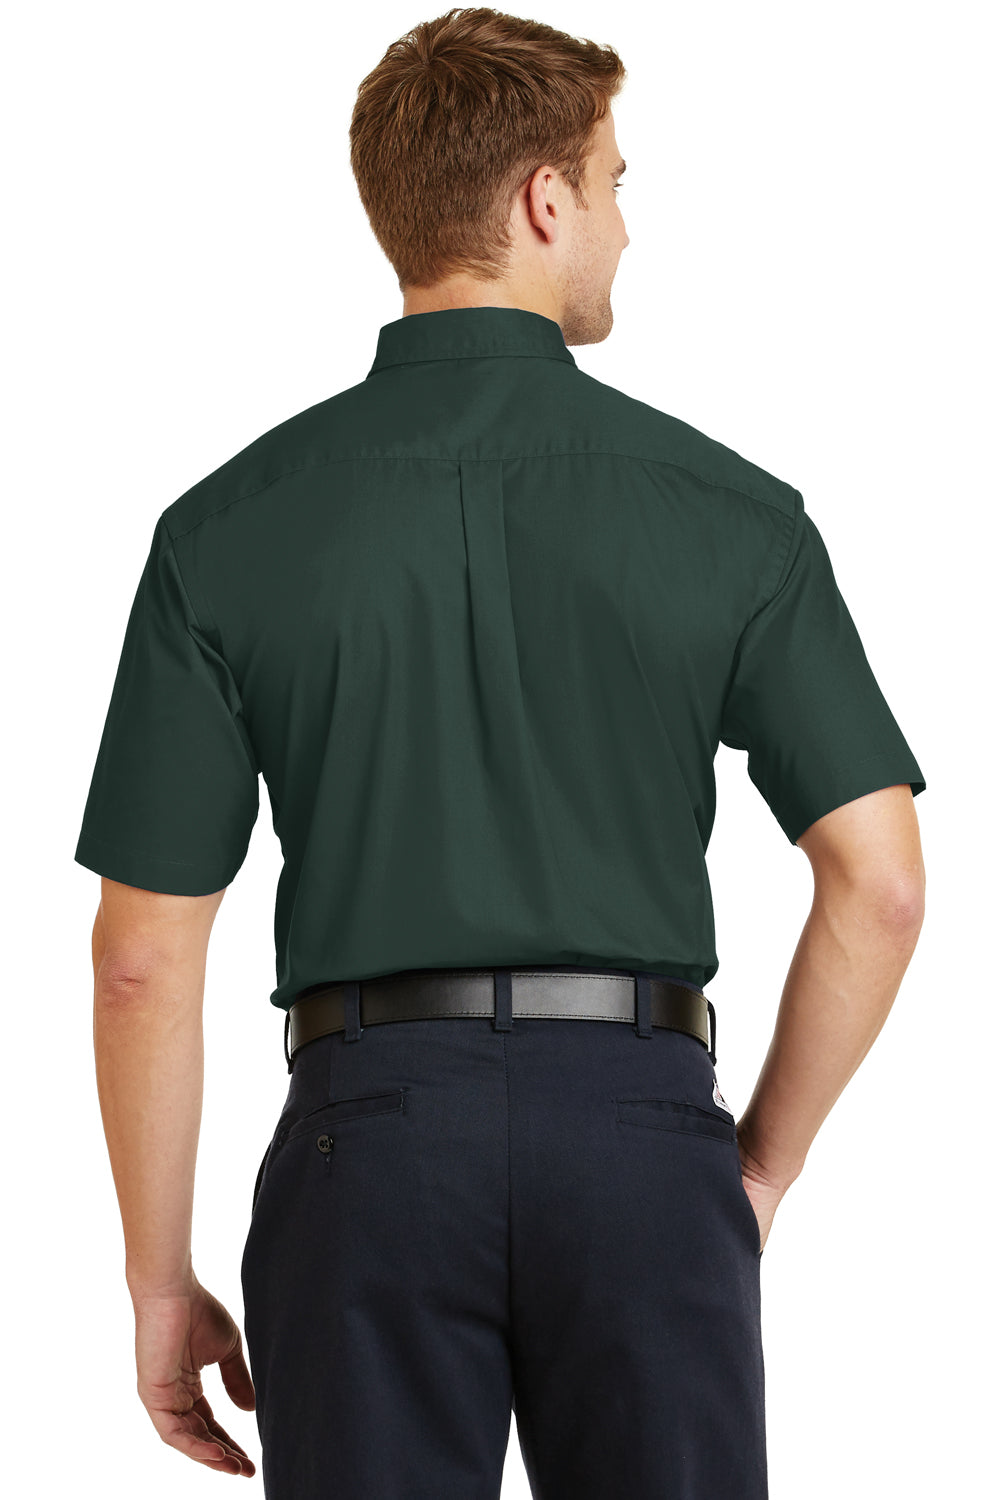 CornerStone SP18 Mens SuperPro Stain Resistant Short Sleeve Button Down Shirt w/ Pocket Dark Green Back